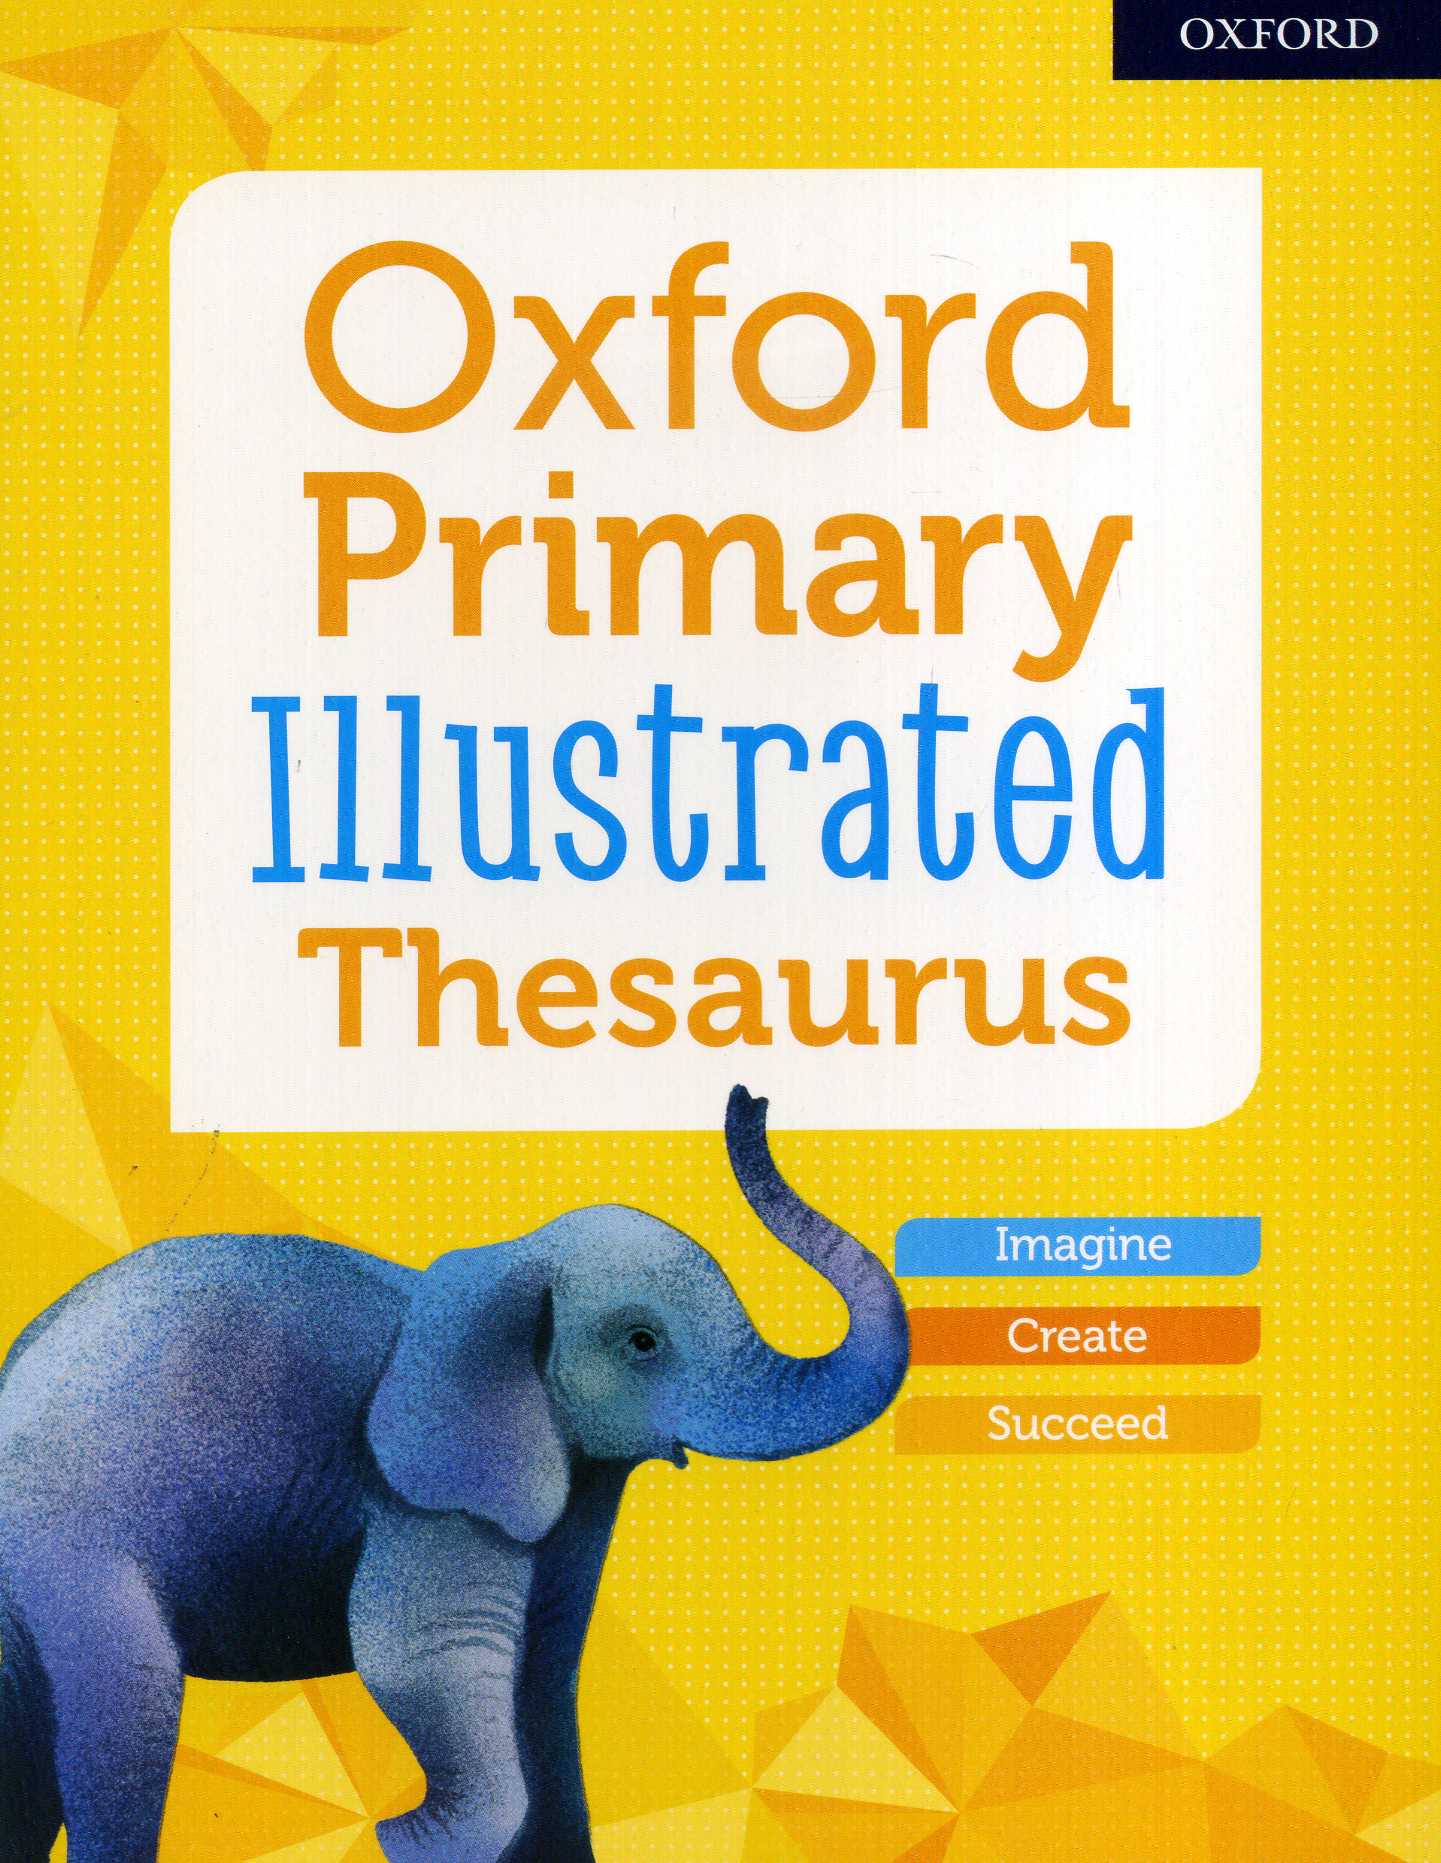 Illustrated　9780192768469　Thesaurus　Primary　House　Educational　Oxford　Laburnum